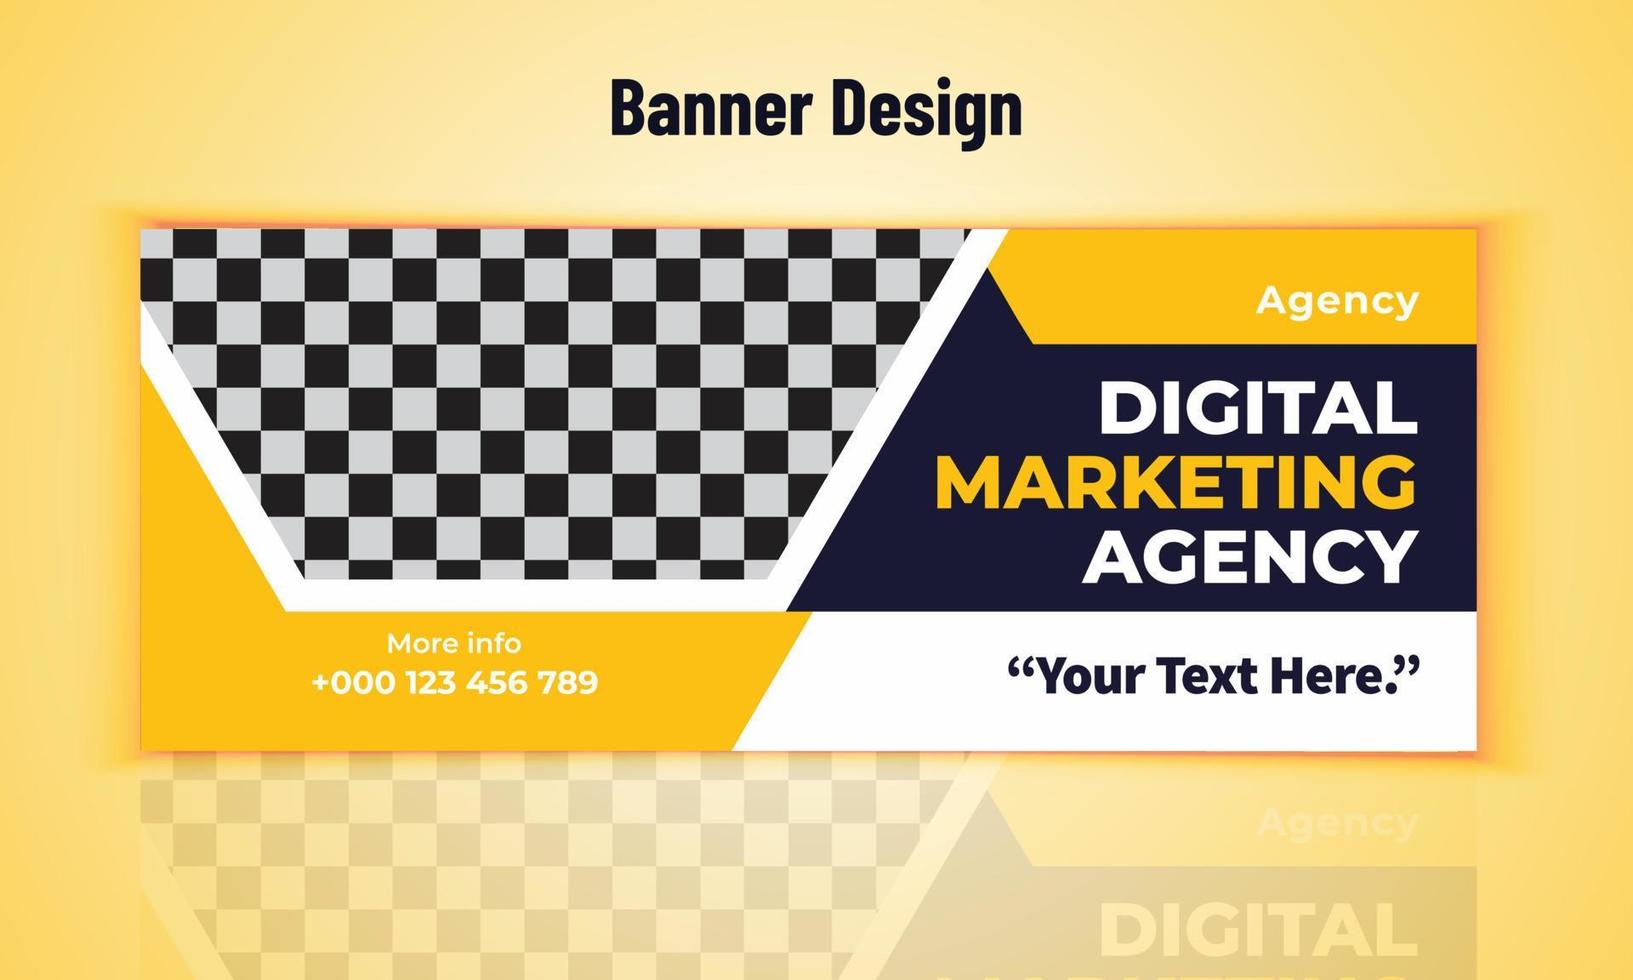 Business Banner Design Vector Template. Modern Layout Design. Corporate Banner